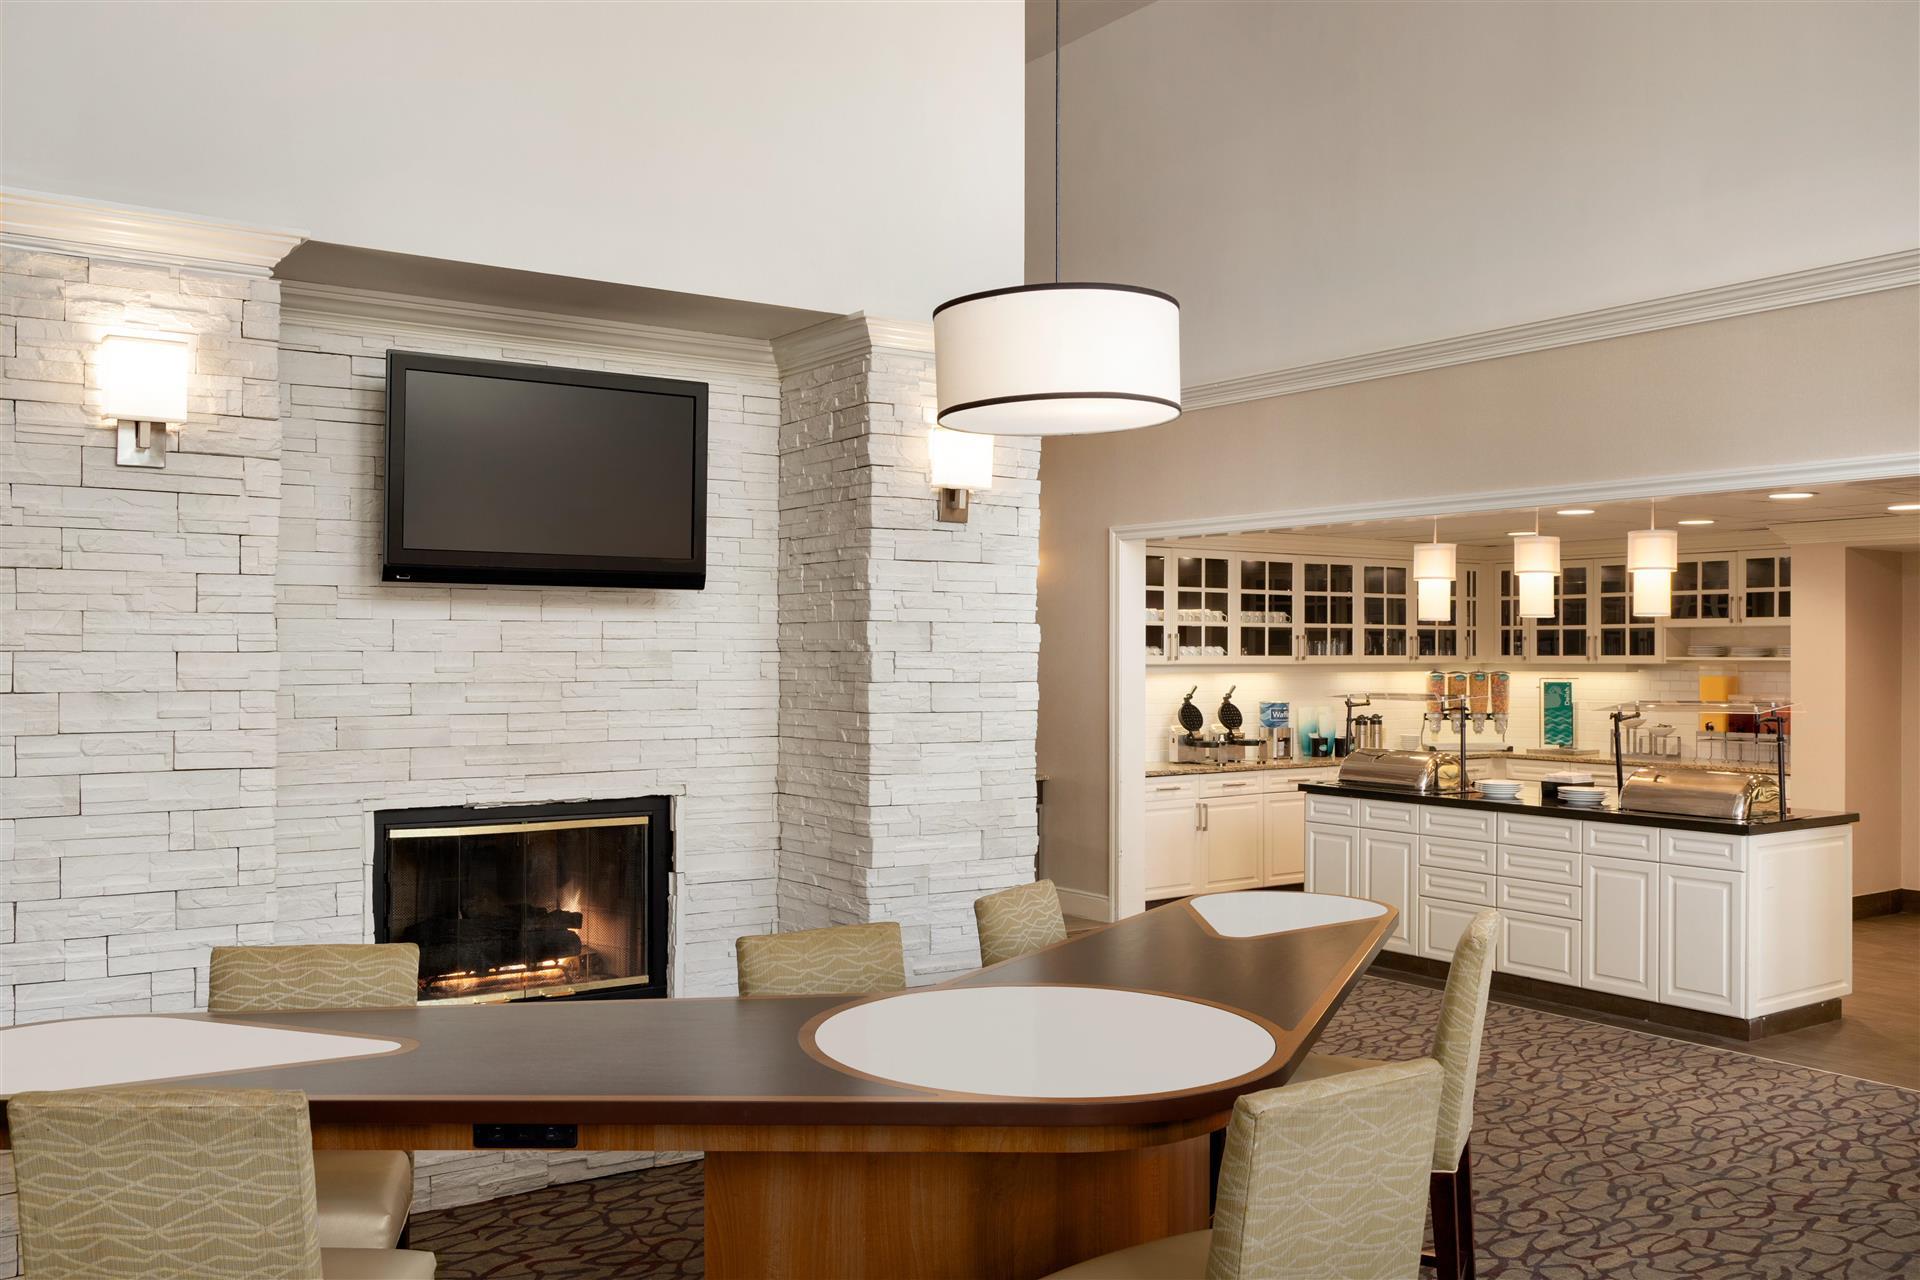 Homewood Suites by Hilton St. Petersburg Clearwater in Clearwater, FL